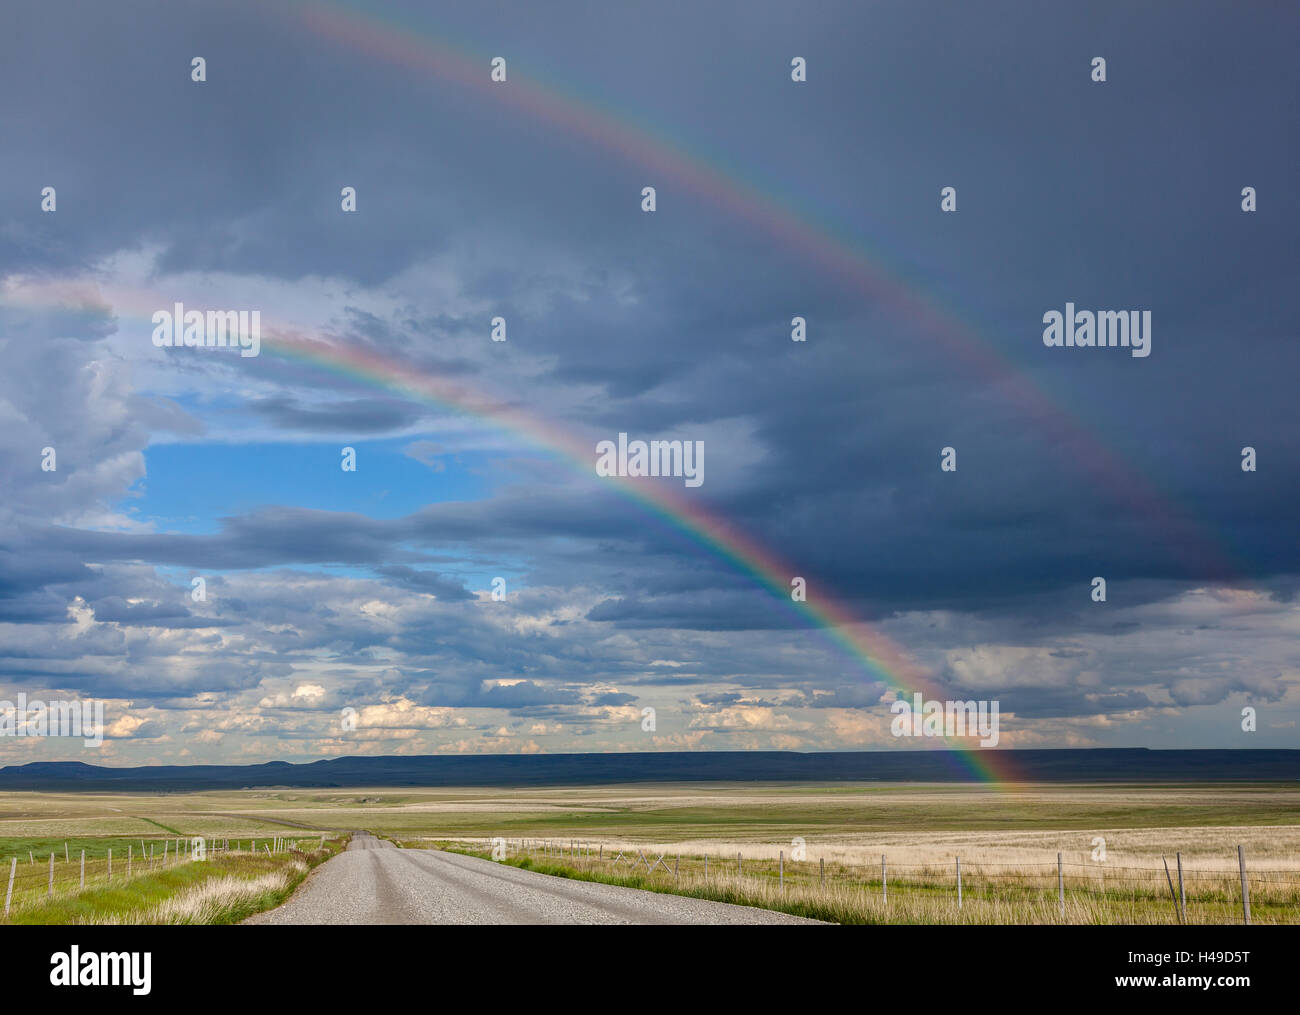 Teton County, Montana: Double rainbow over open rangelands Stock Photo